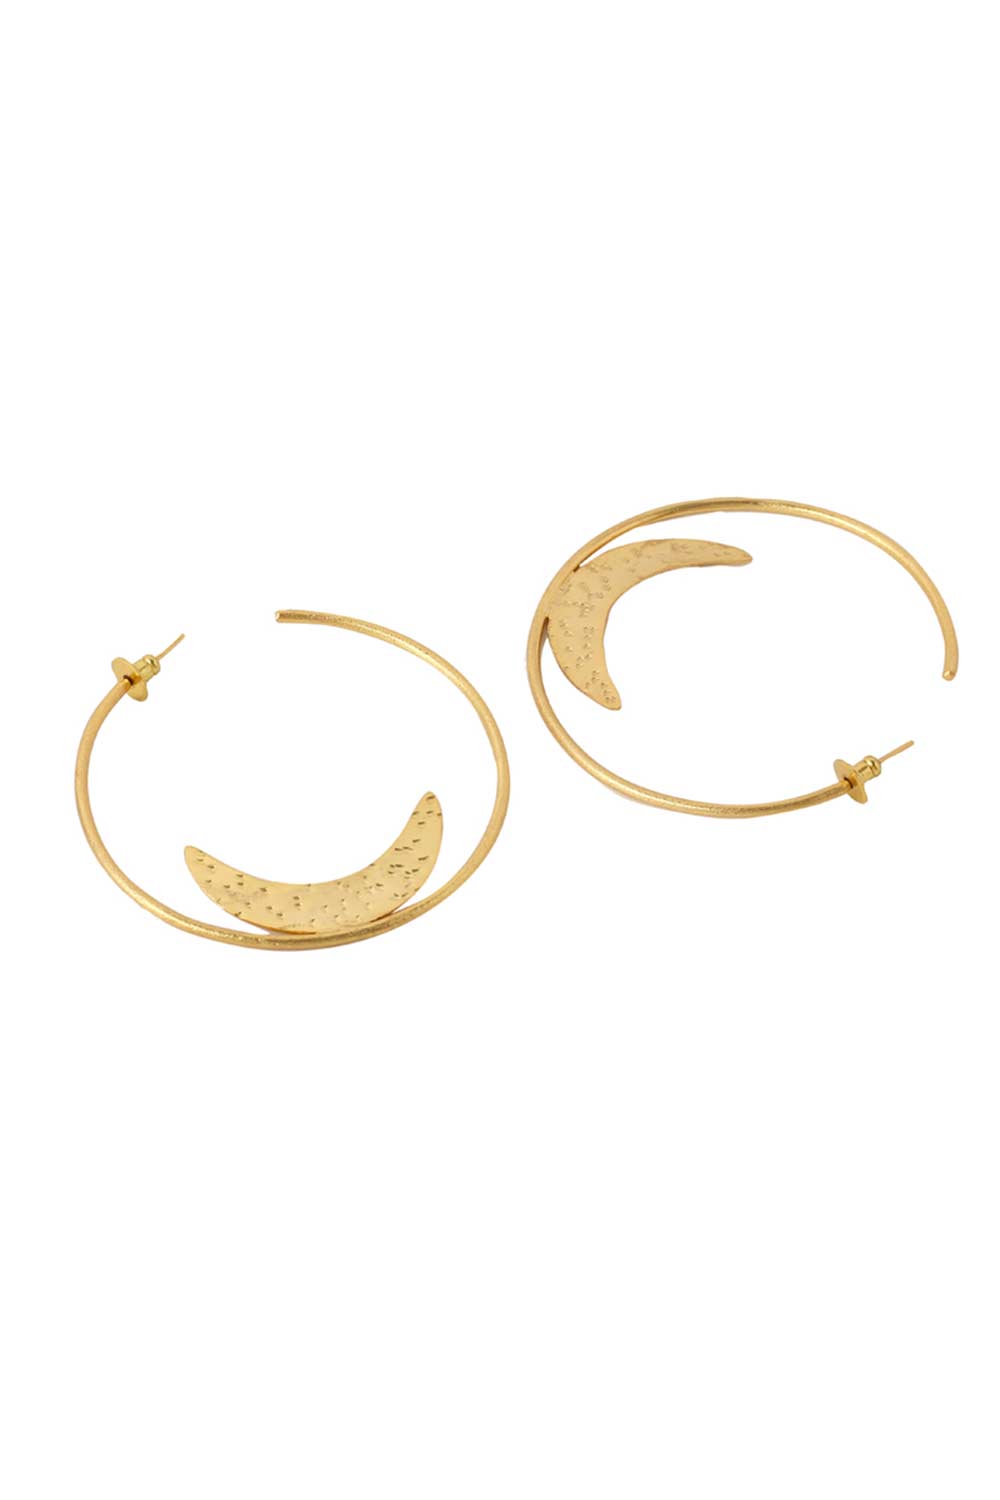 Buy Handcrafted Gold Matt Finish Crescent Design In A Hoop Online - Side